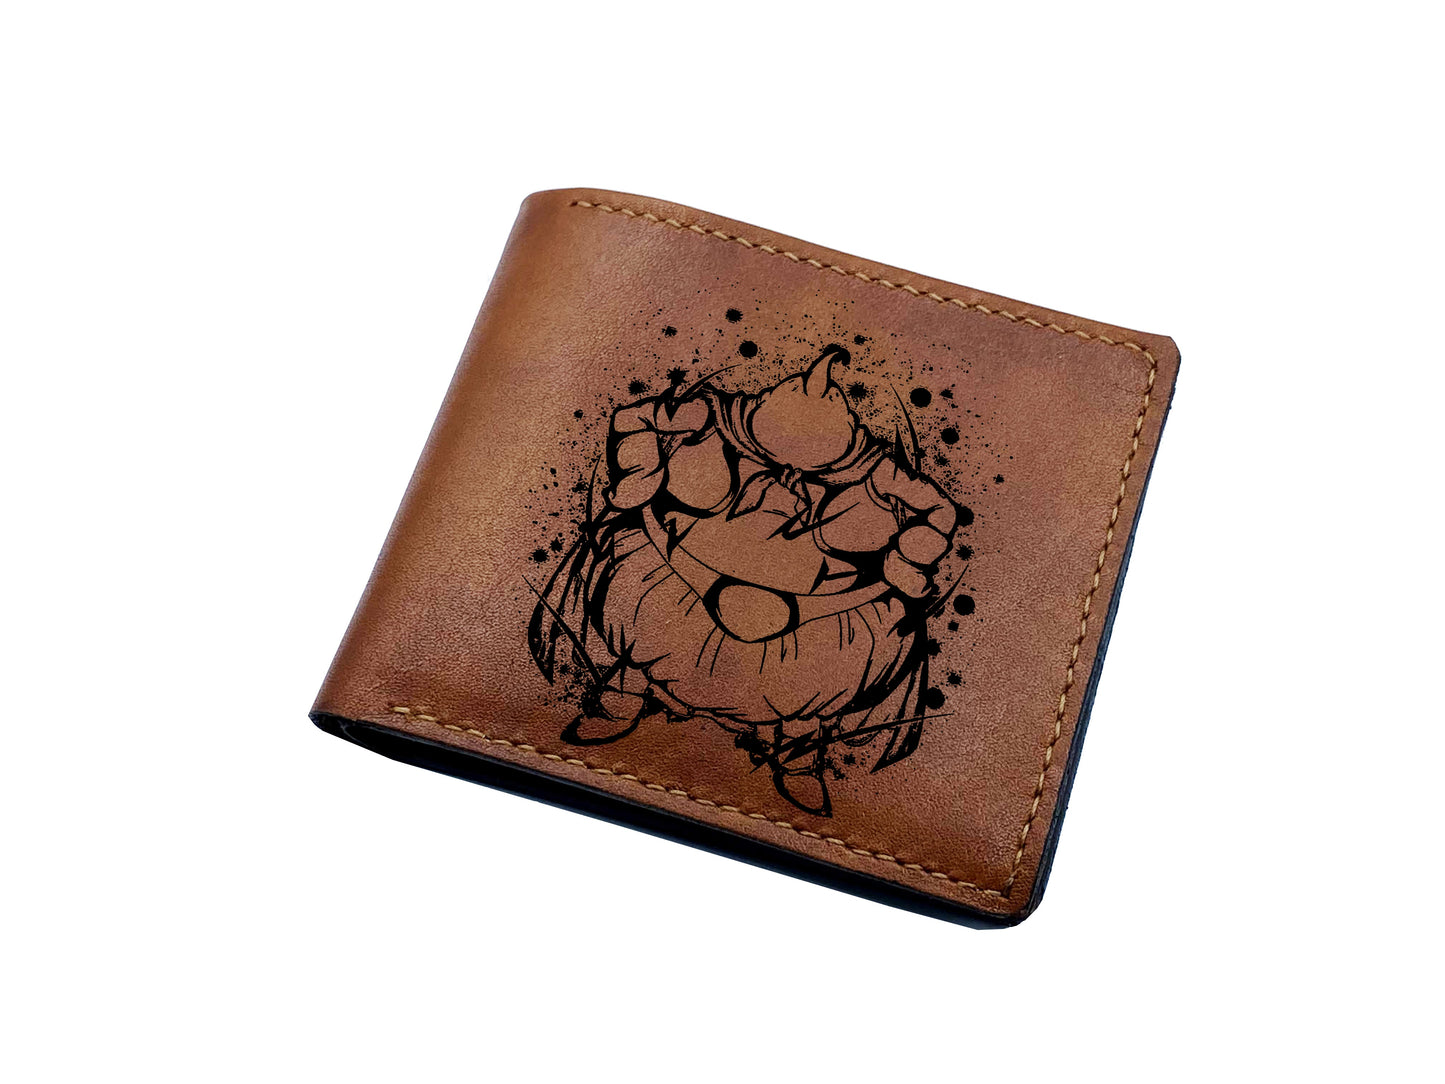 Mayan Corner - Vegeta princess Super Saiyan leather wallet, dragon ball leather art present, leather anniversary gift for him, christmas gift ideas